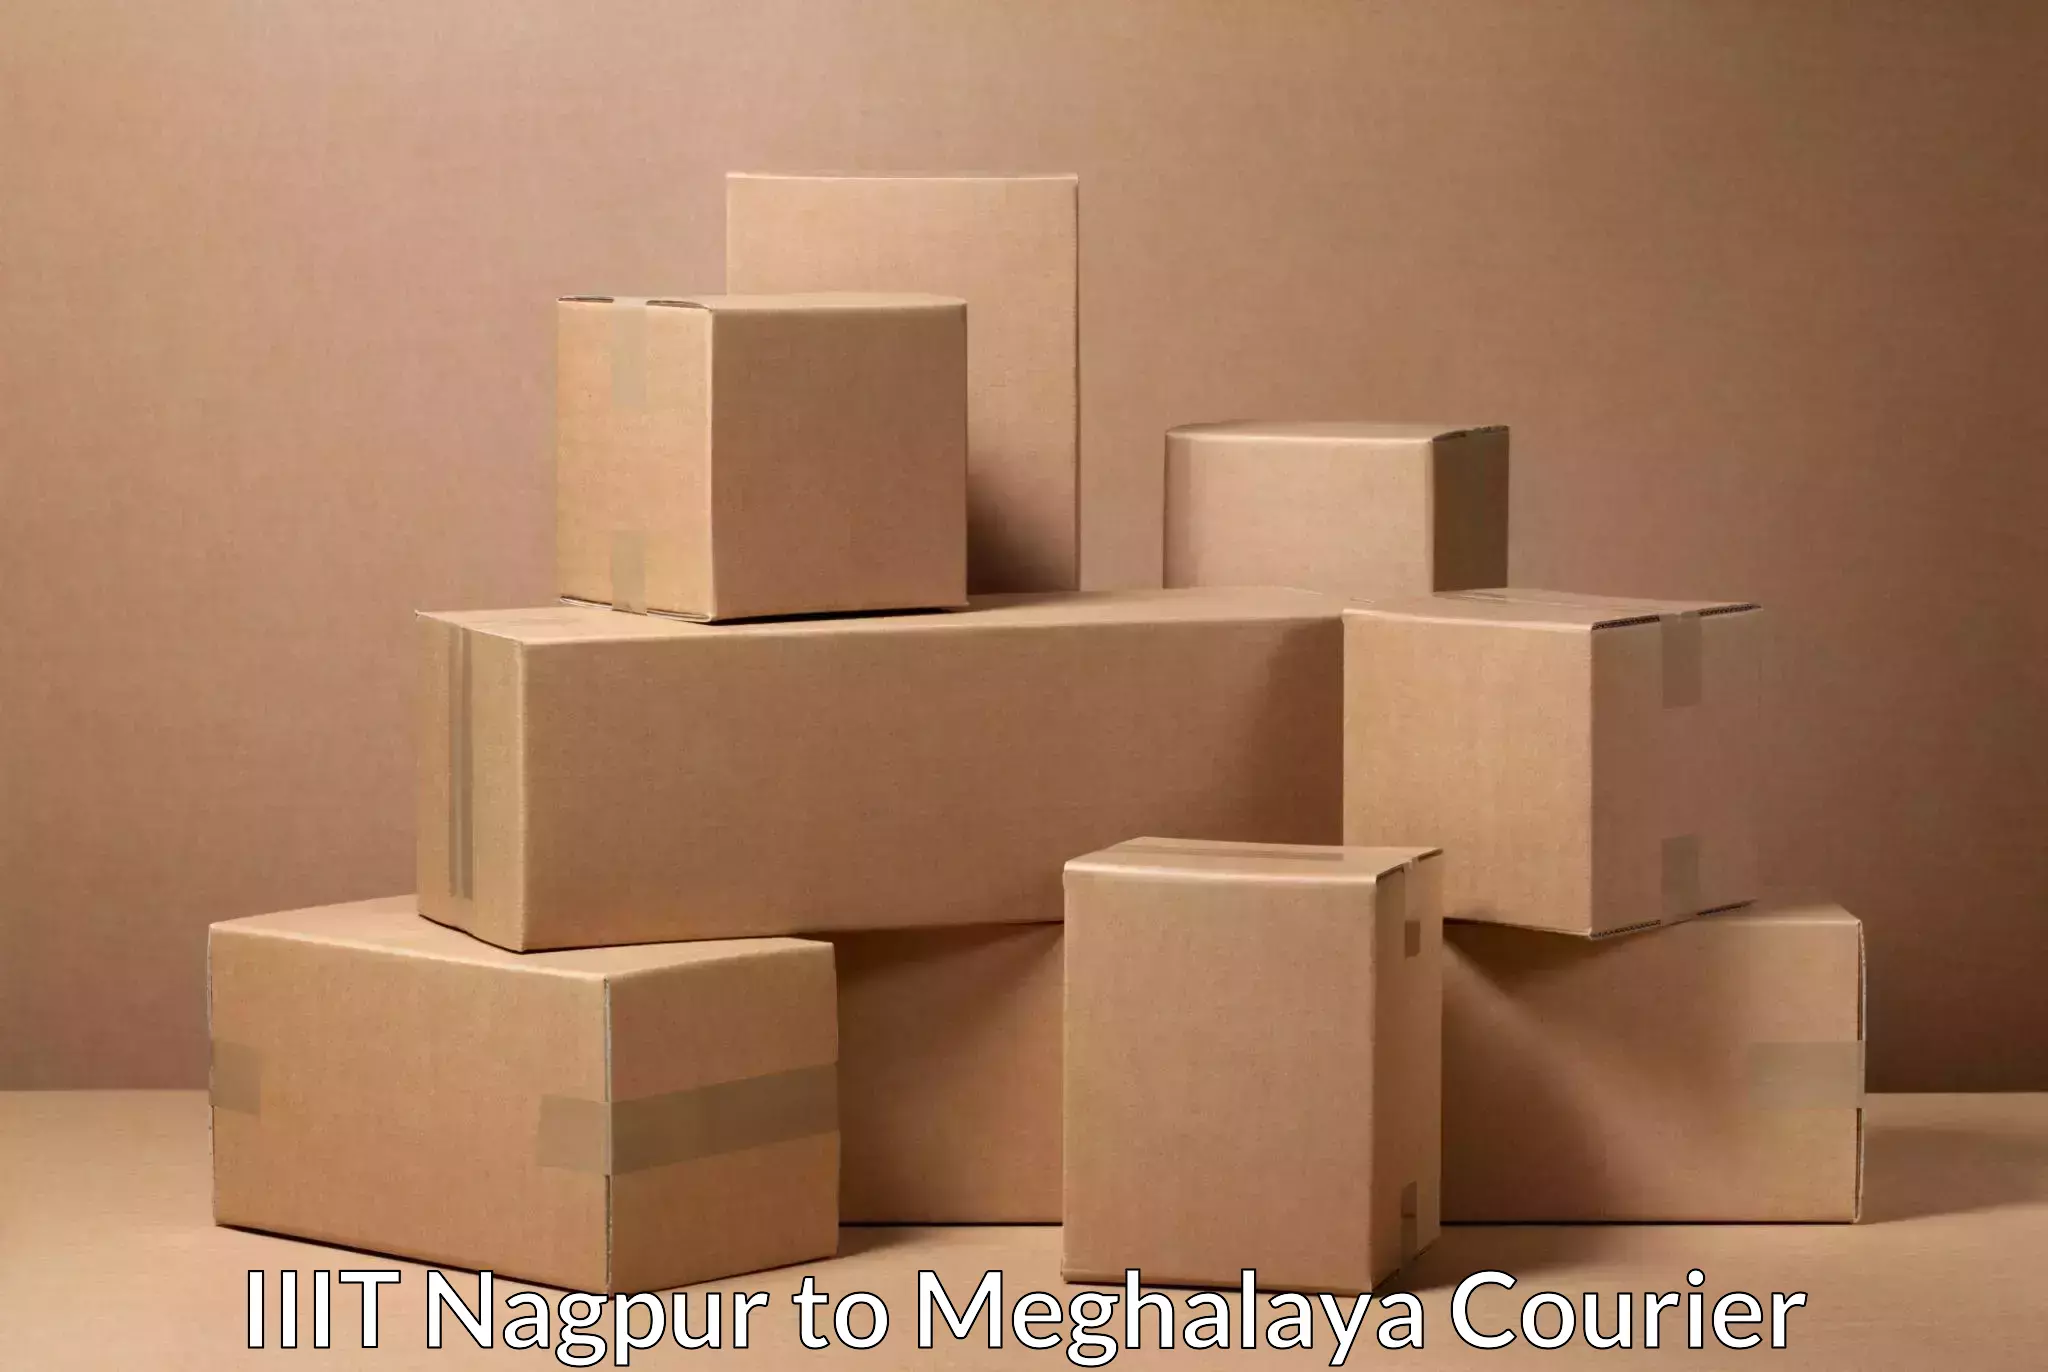 Doorstep delivery service IIIT Nagpur to Meghalaya